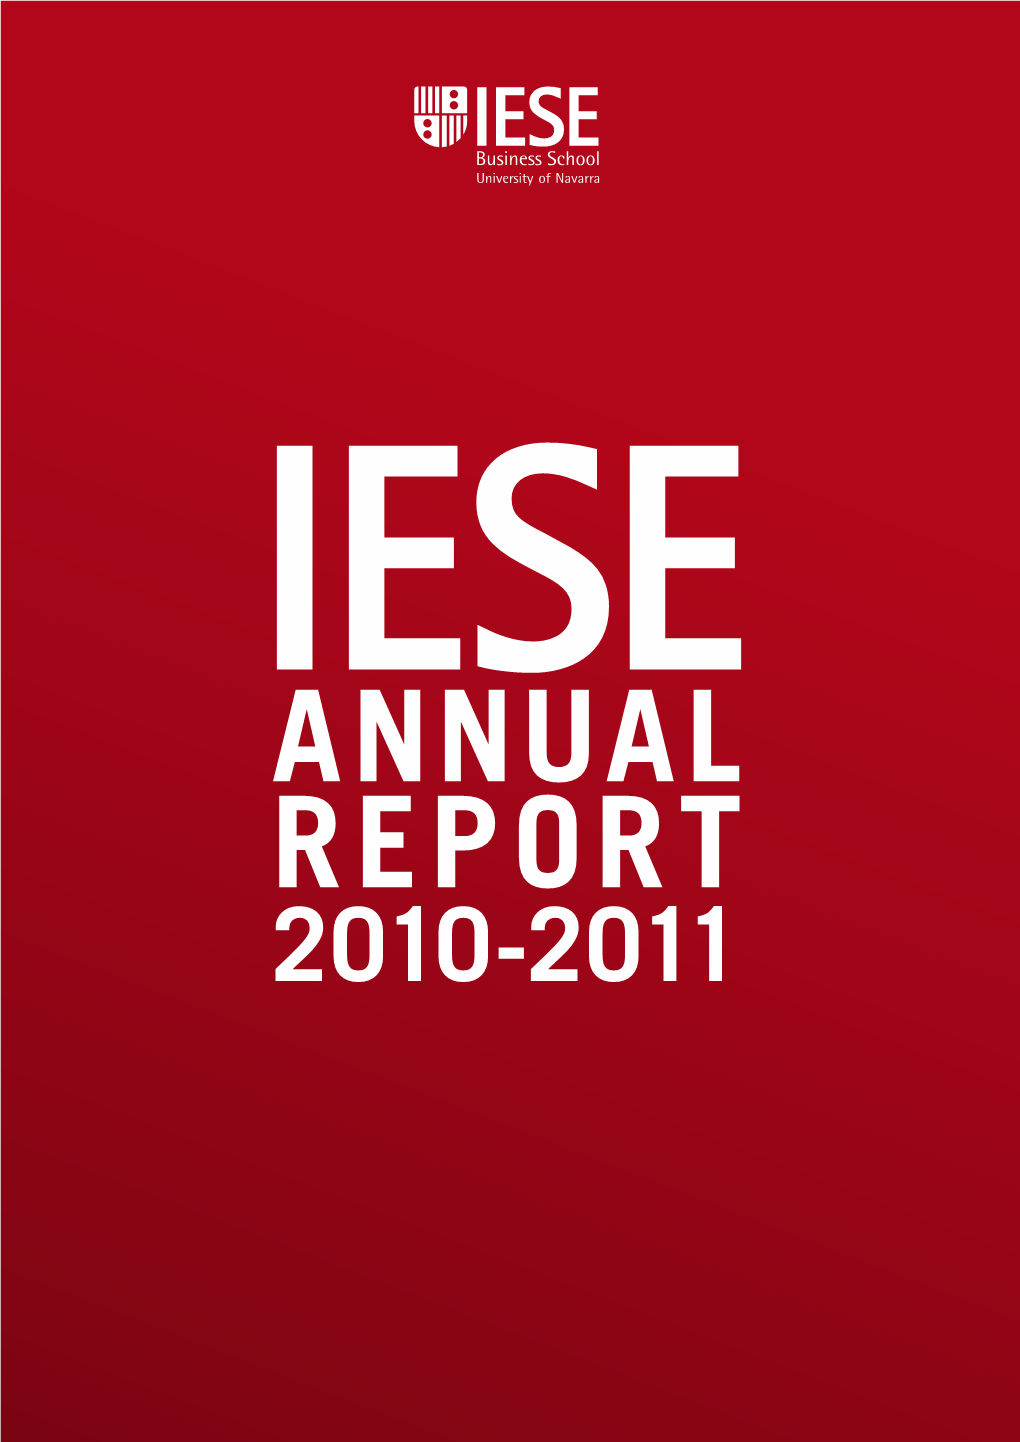 ANNUAL Report 2010-2011